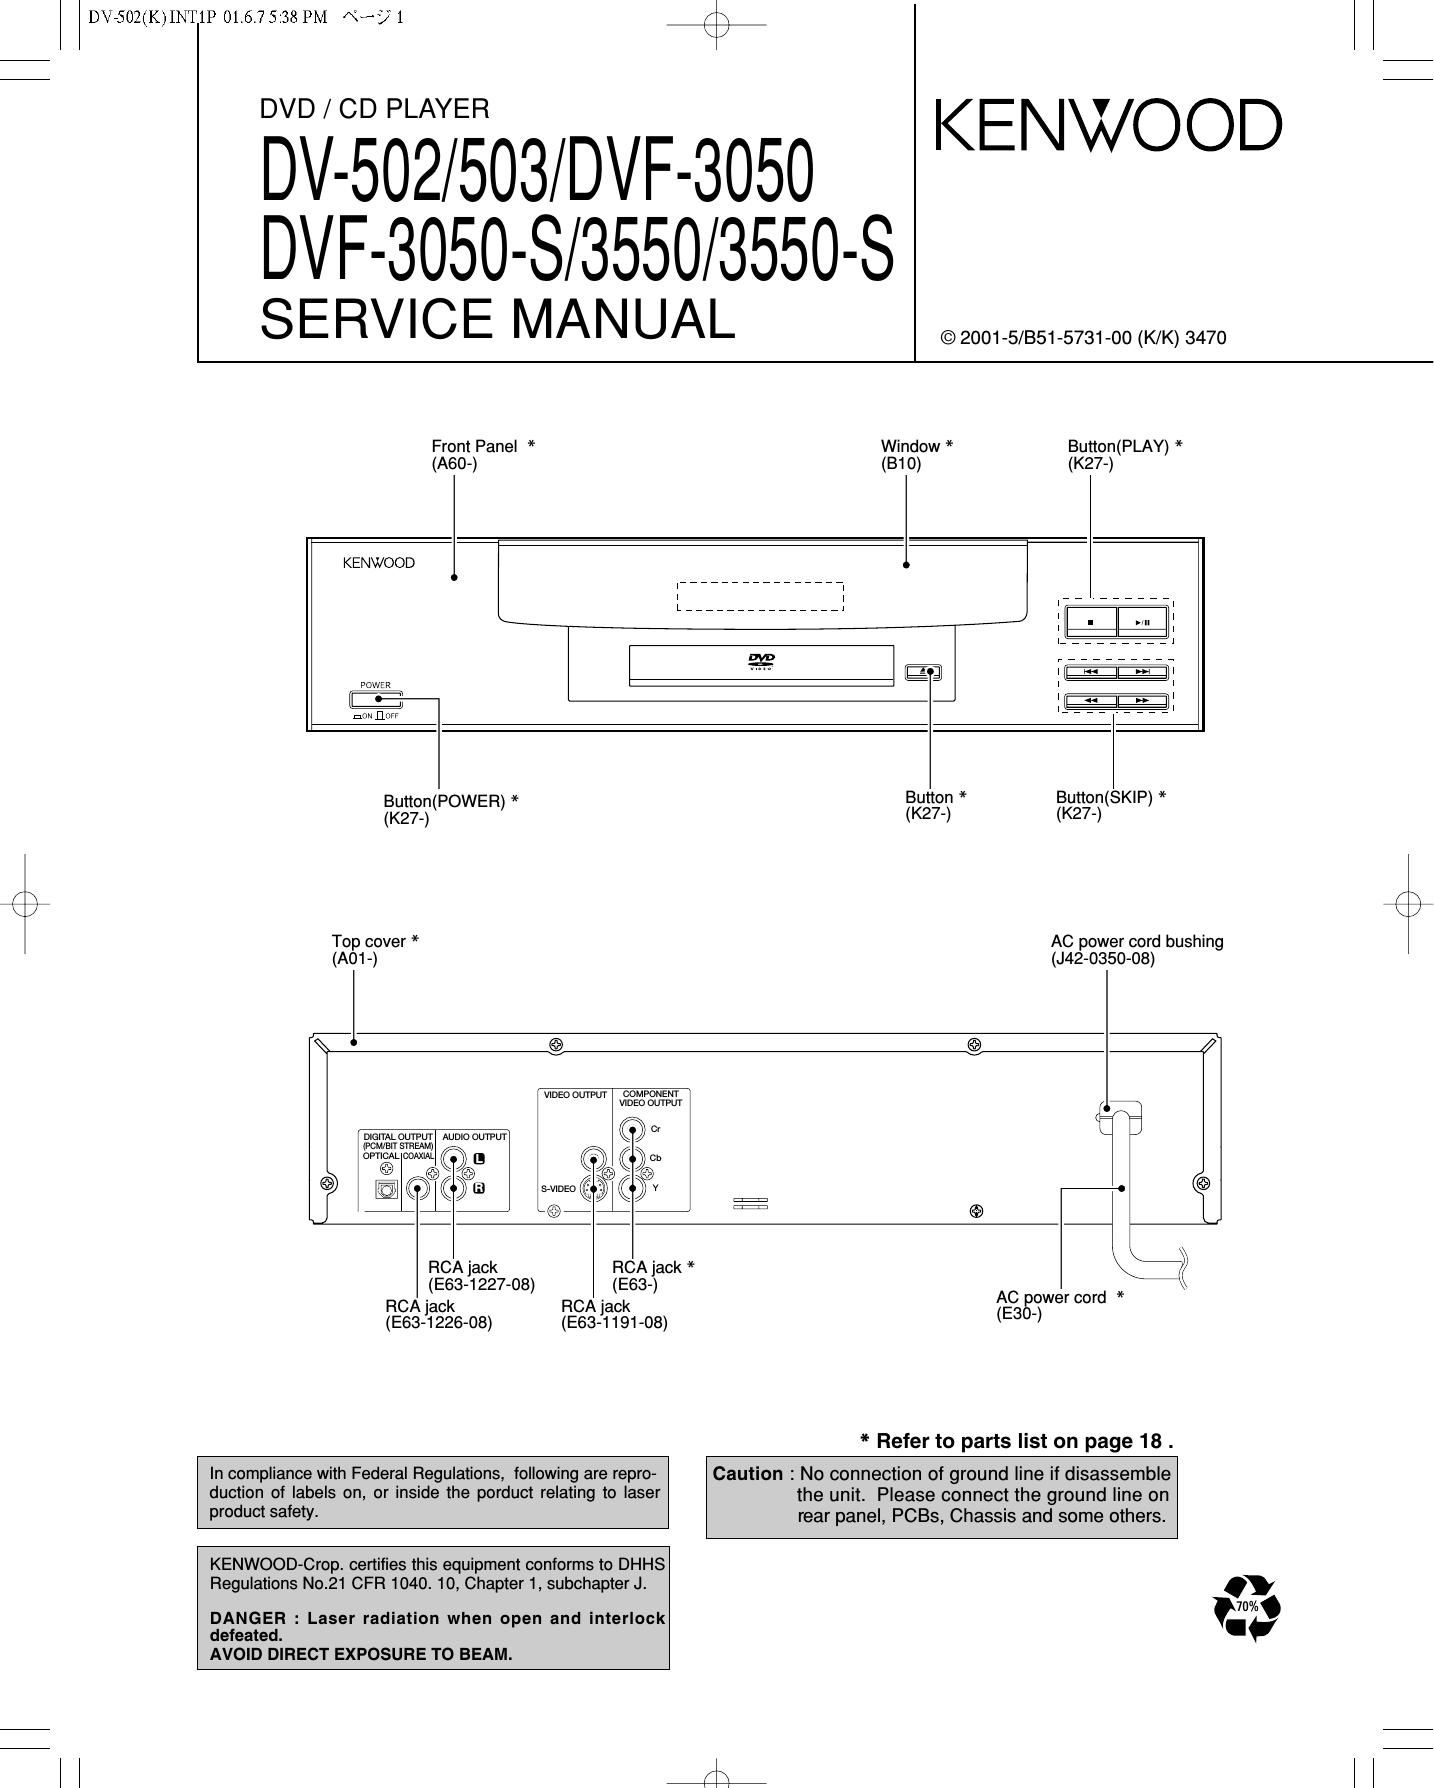 Kenwood DVF 3050 S Service Manual